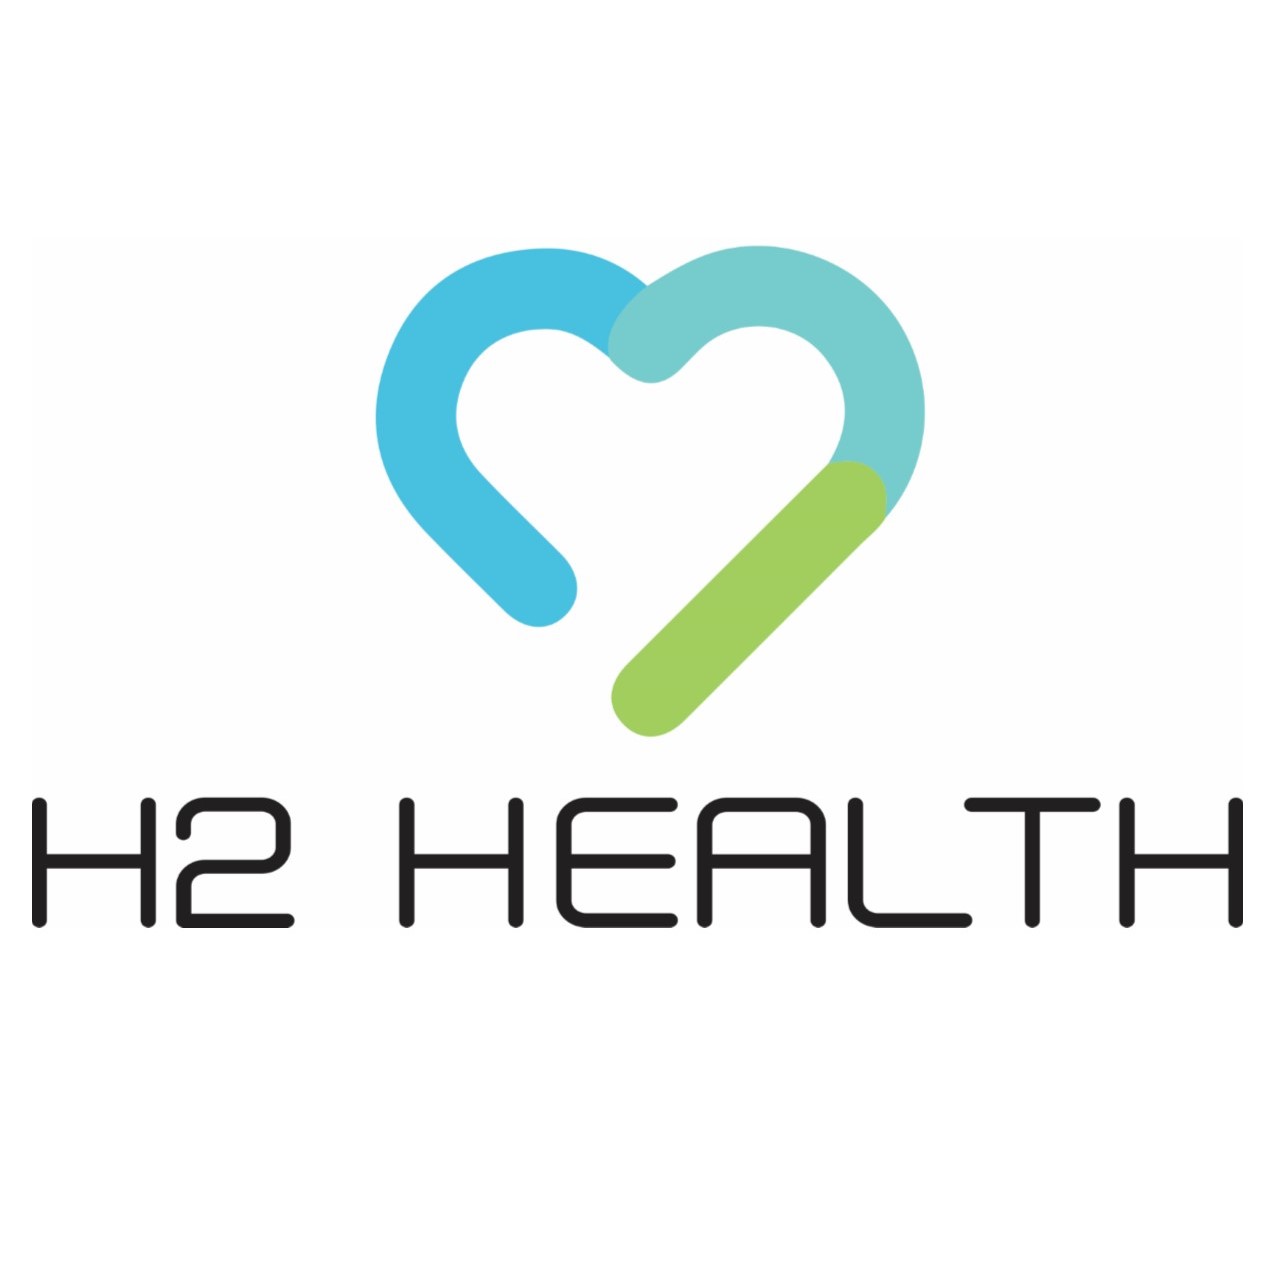 H2 Health- Jenks, OK